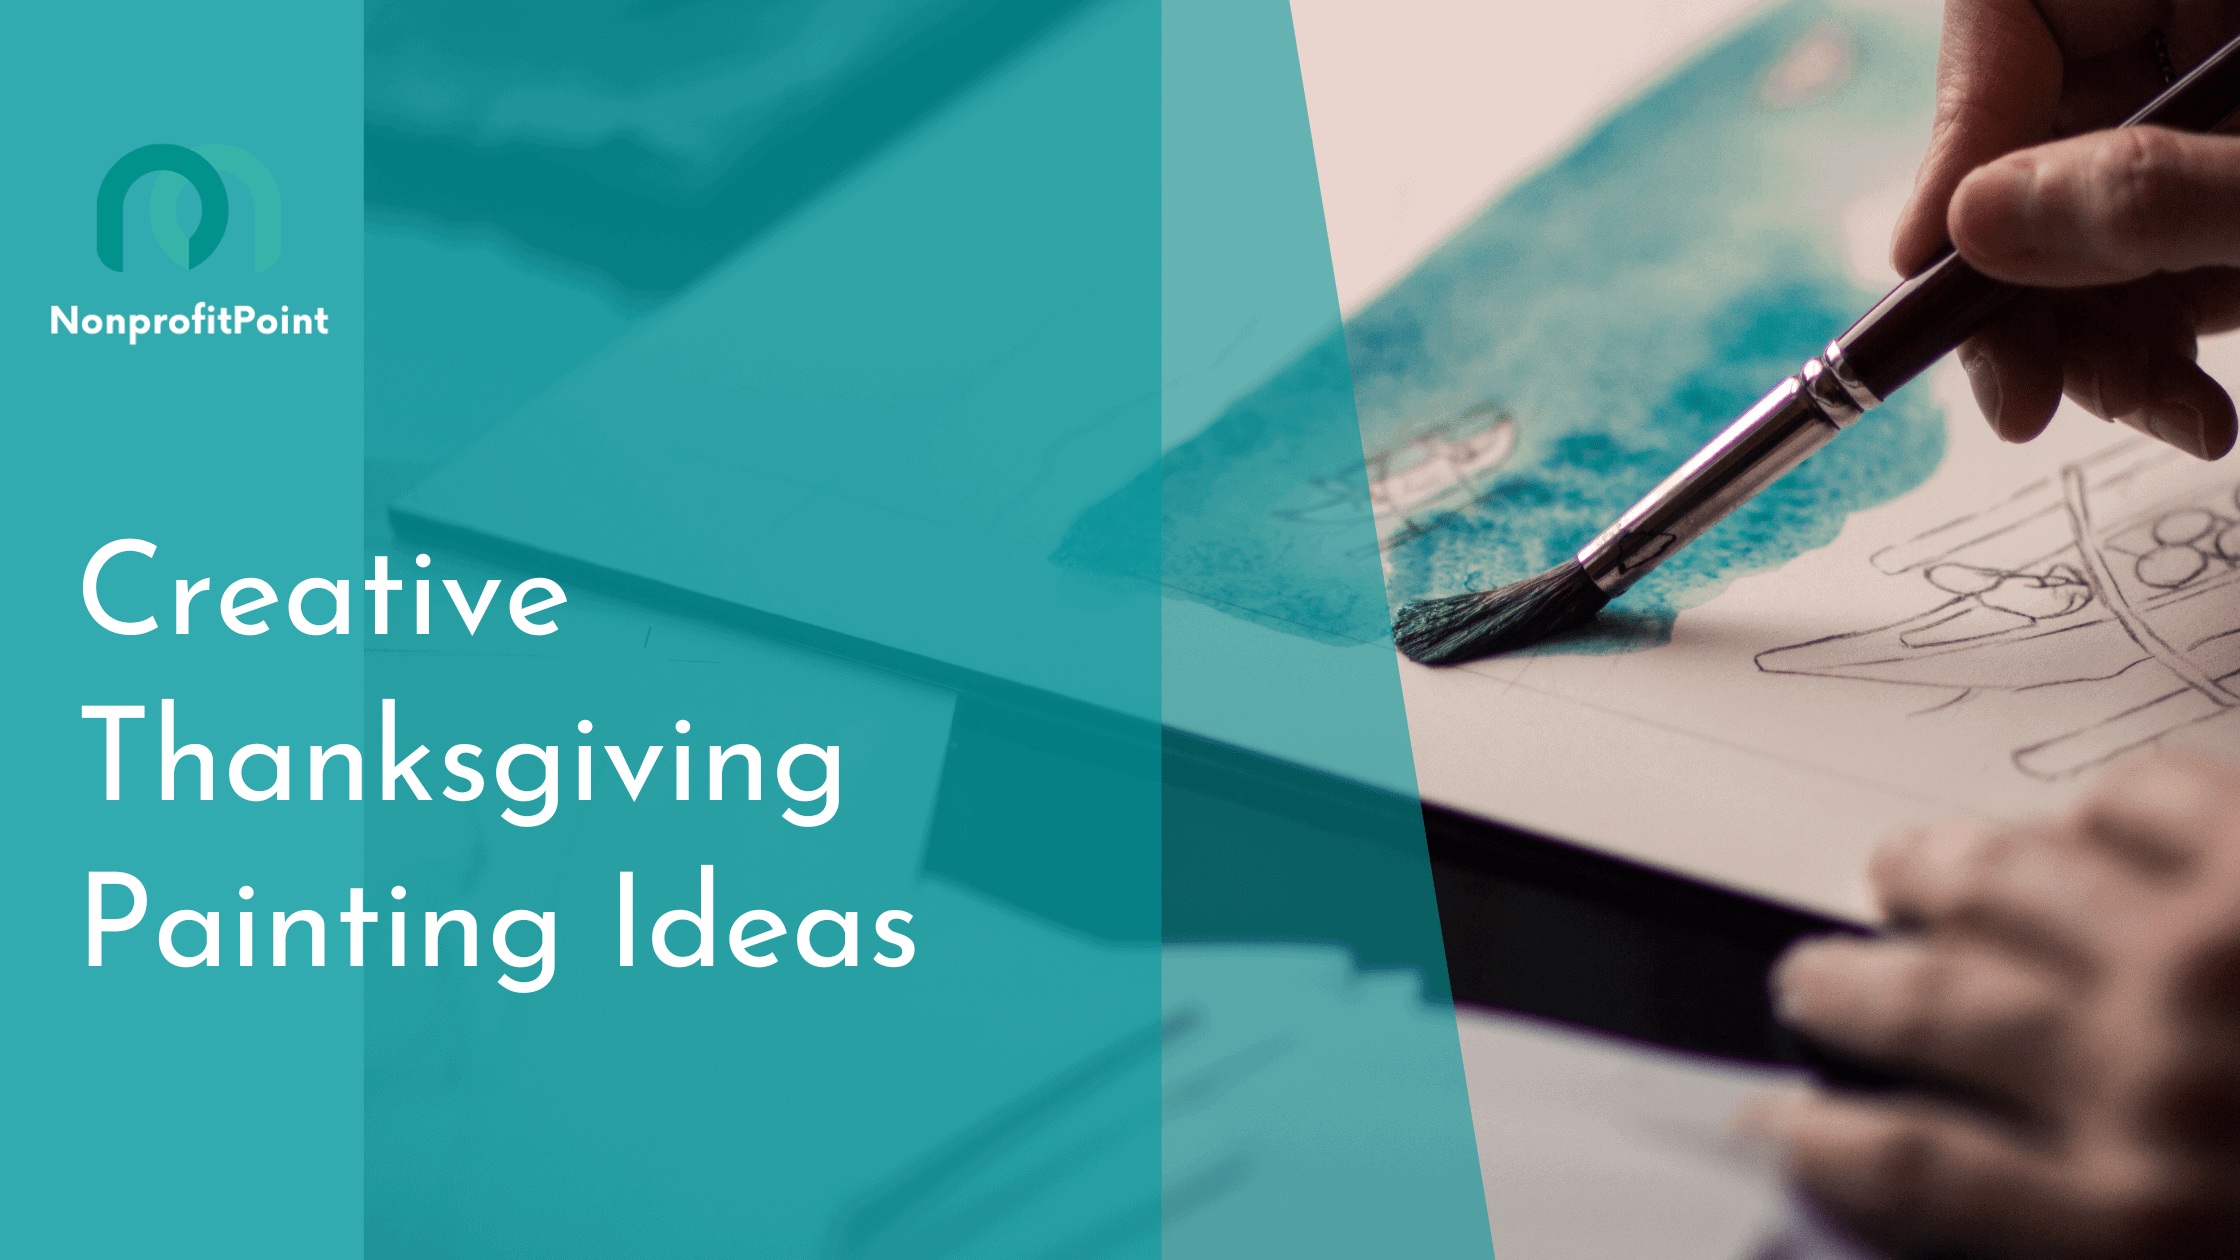 Creative Thanksgiving Painting Ideas